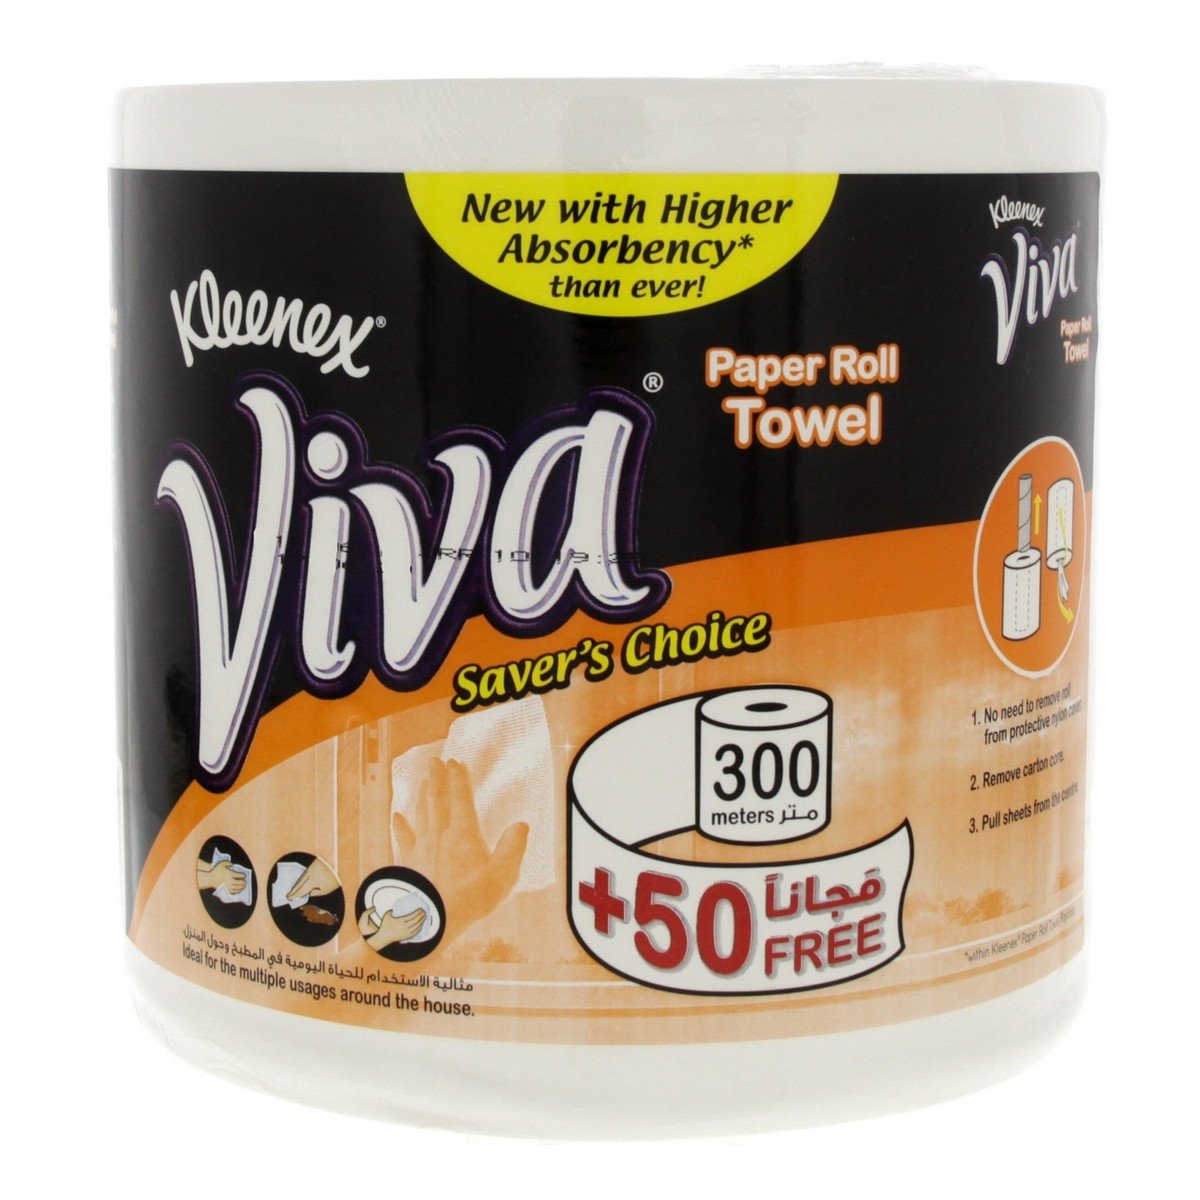 Kleenex Viva Paper Roll Towel 300m + 50m Free